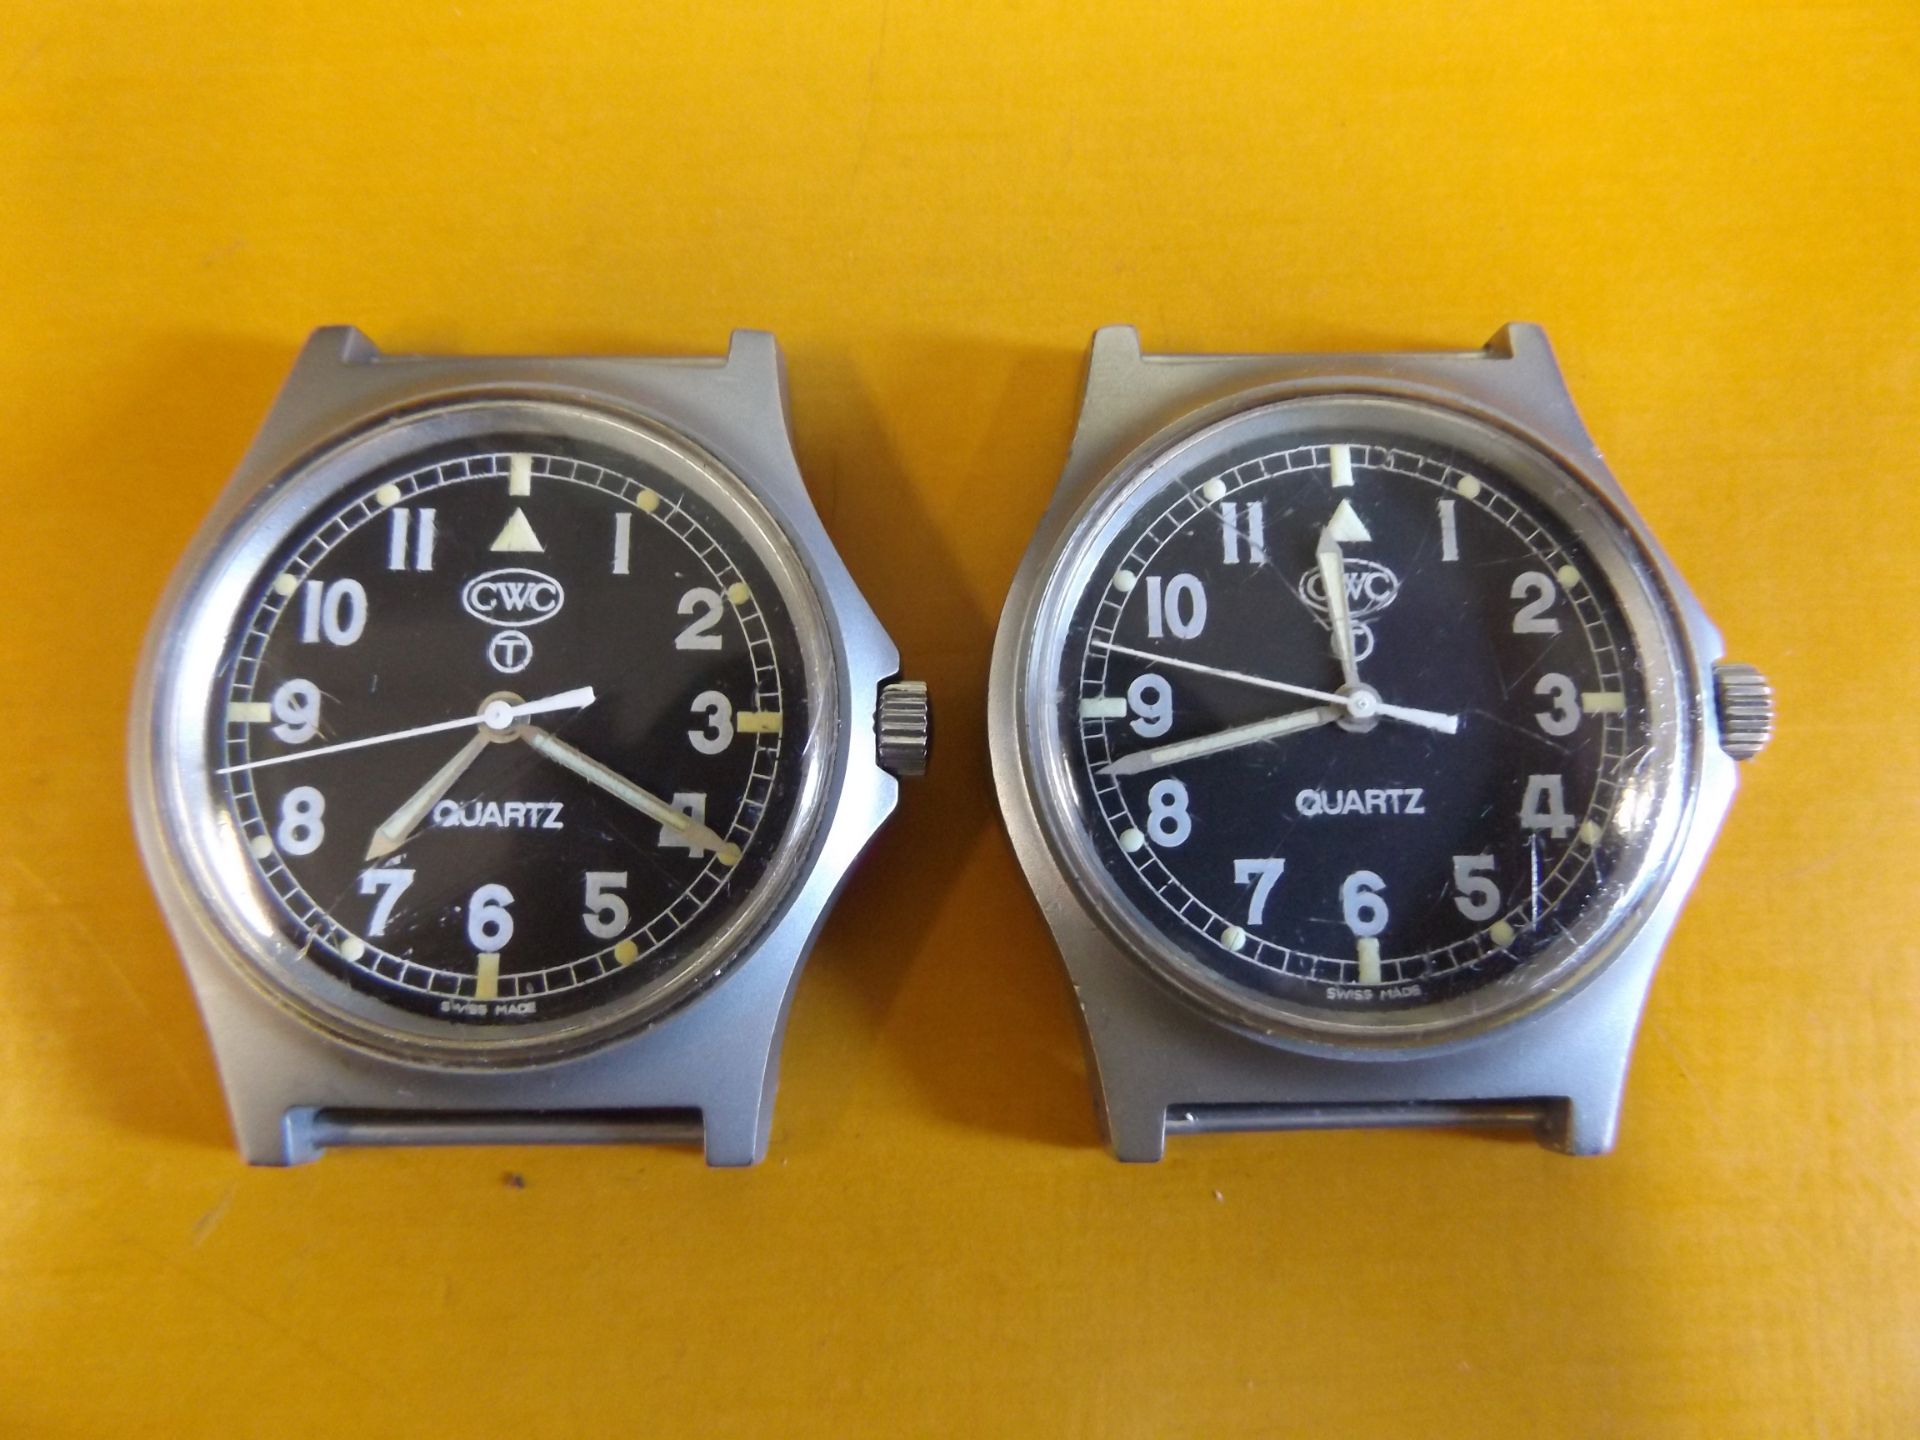 2 x Genuine British Army,CWC quartz wrist watches